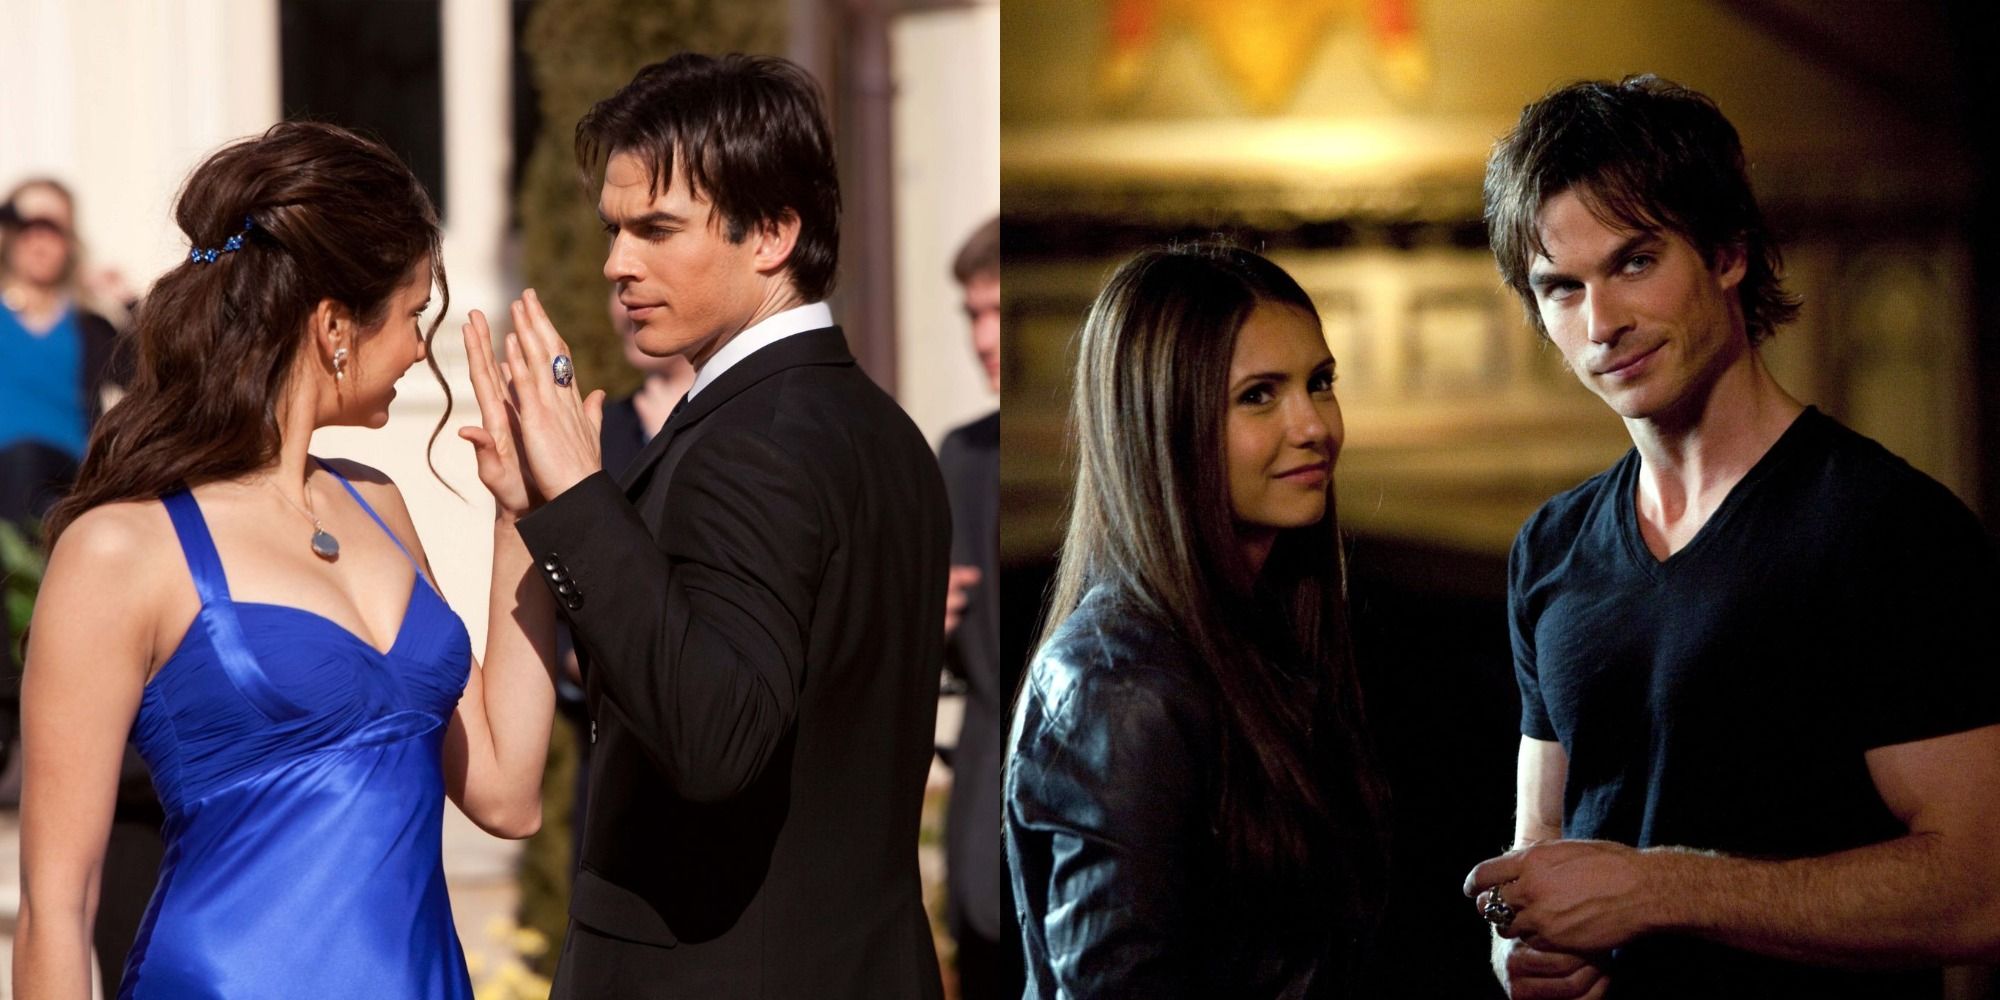 Damon and Elena